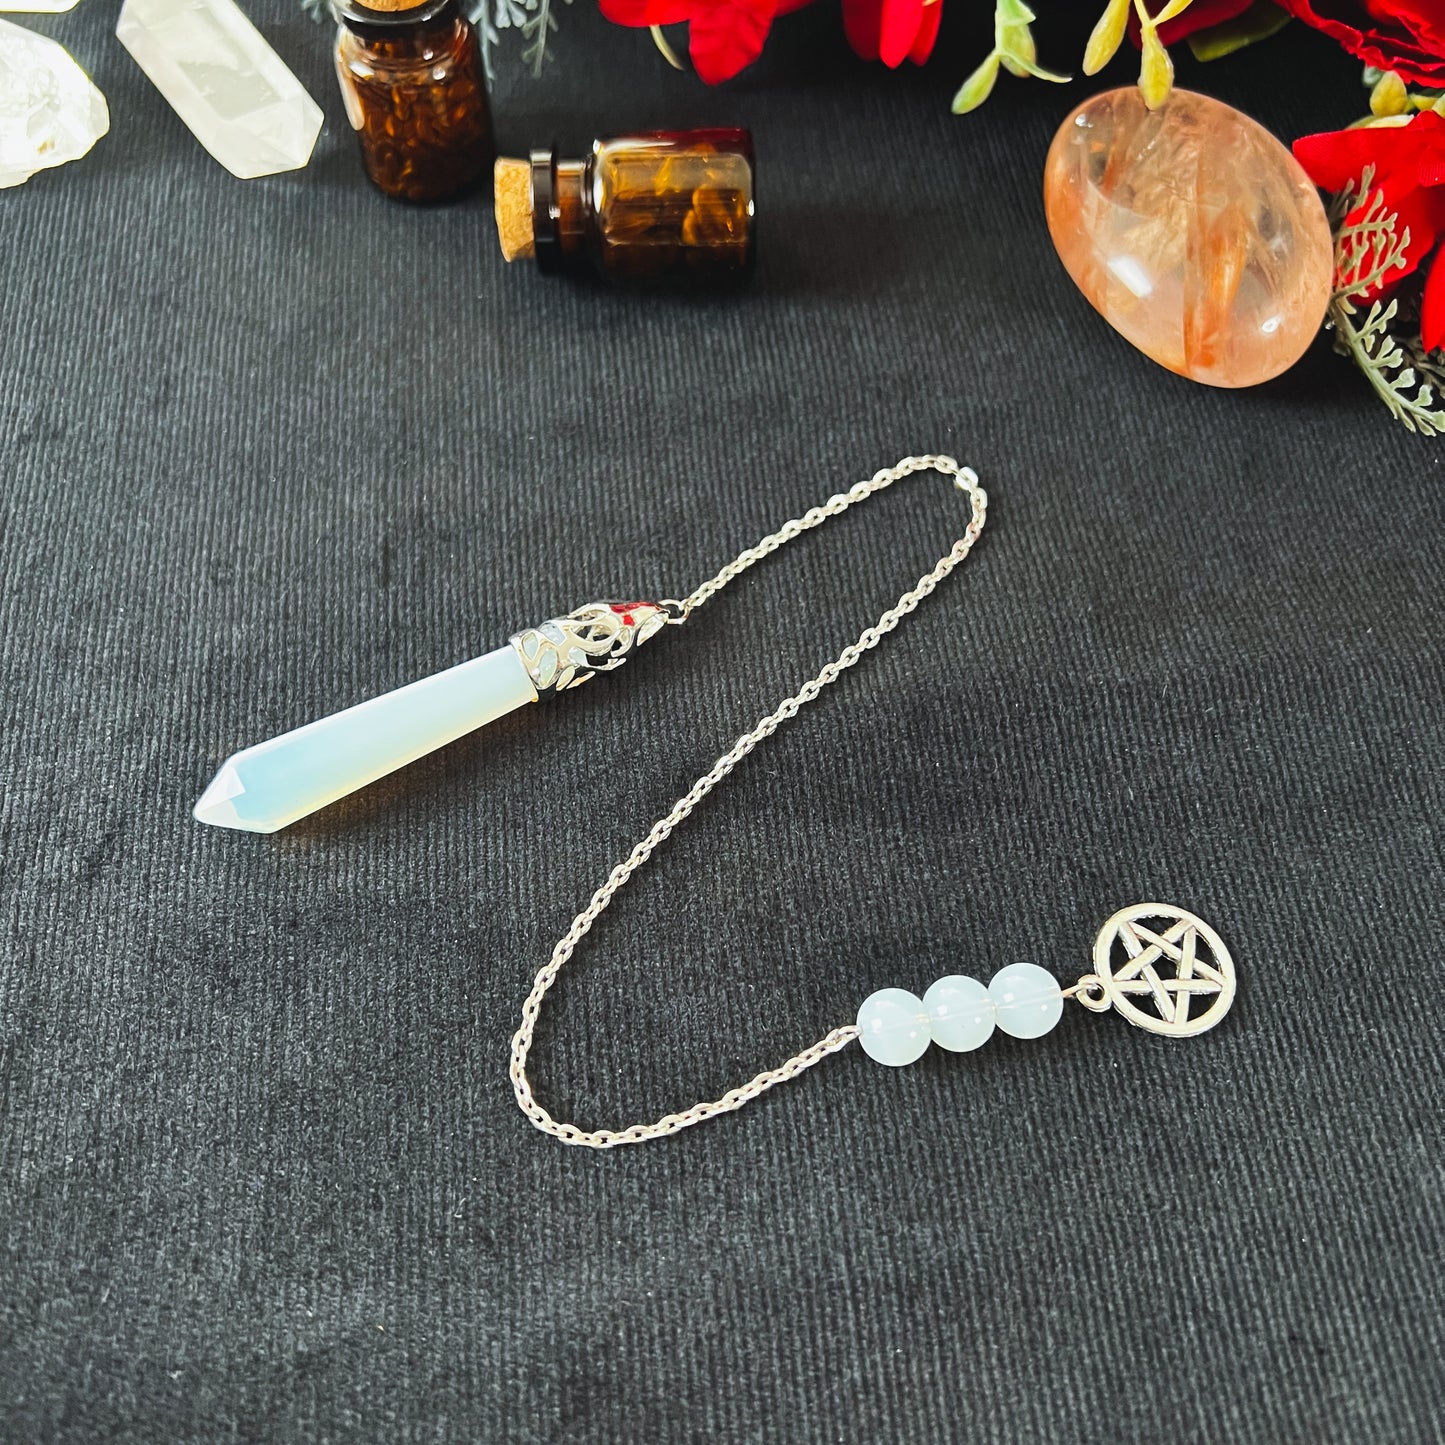 Opalite and pentacle dowsing spiritual pendulum Baguette Magick